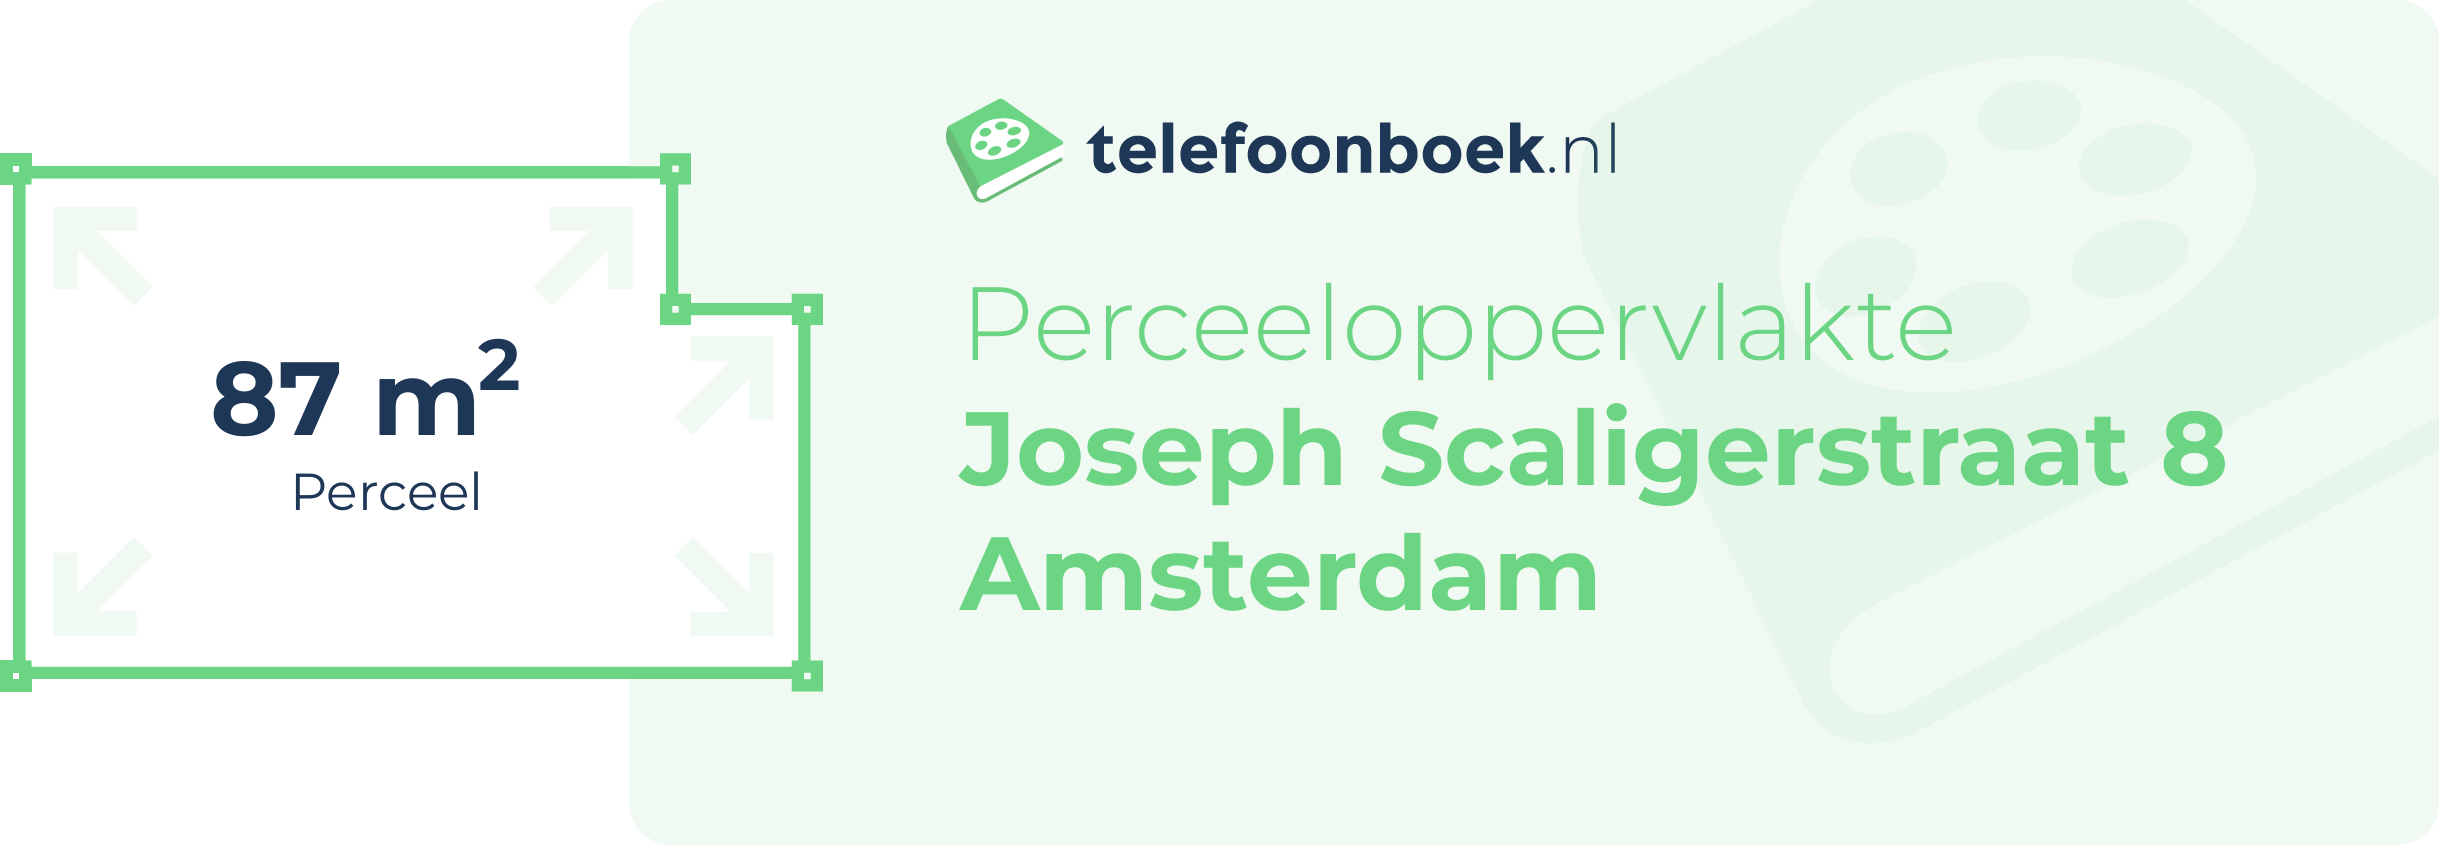 Perceeloppervlakte Joseph Scaligerstraat 8 Amsterdam